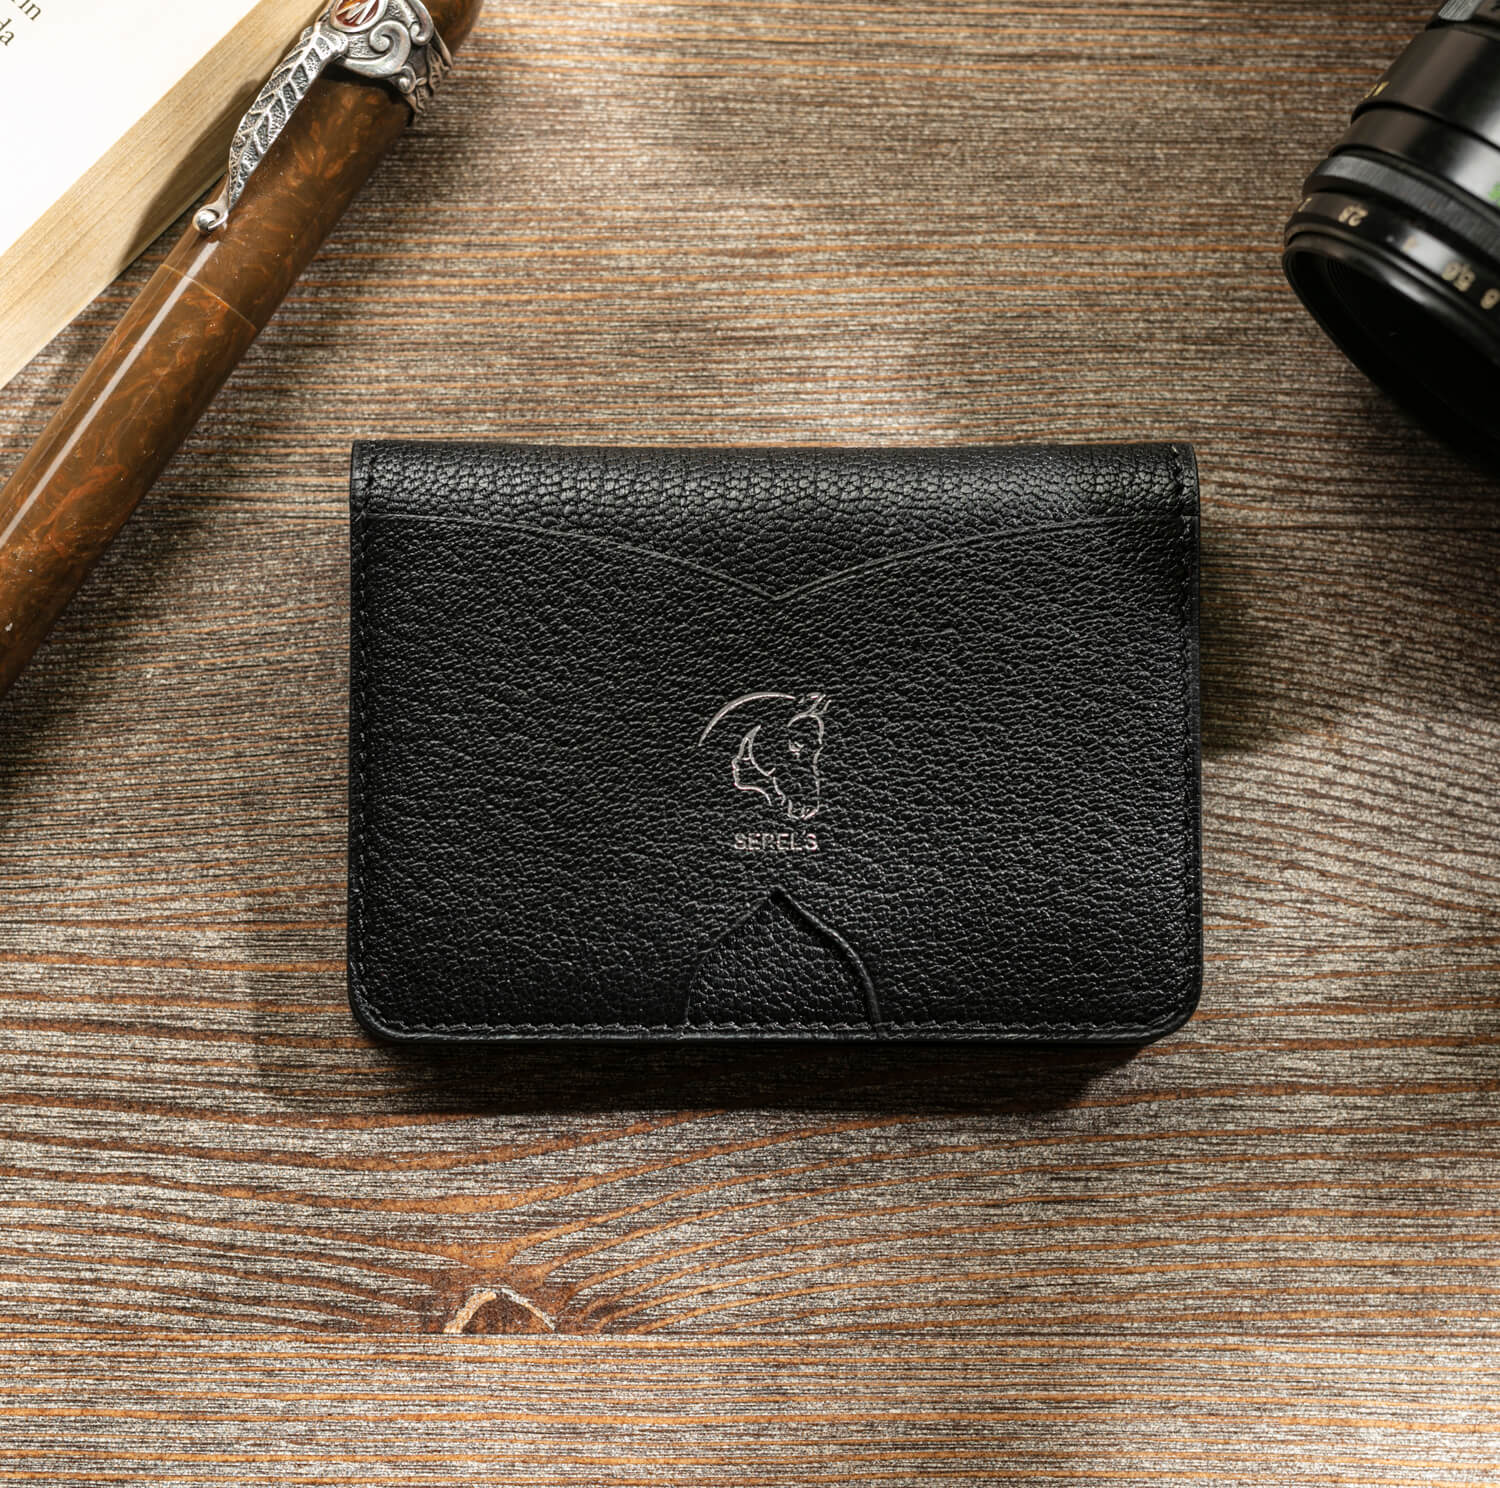 Serel's Men's Thin Minimalist Leather Gracious Bifold Wallet